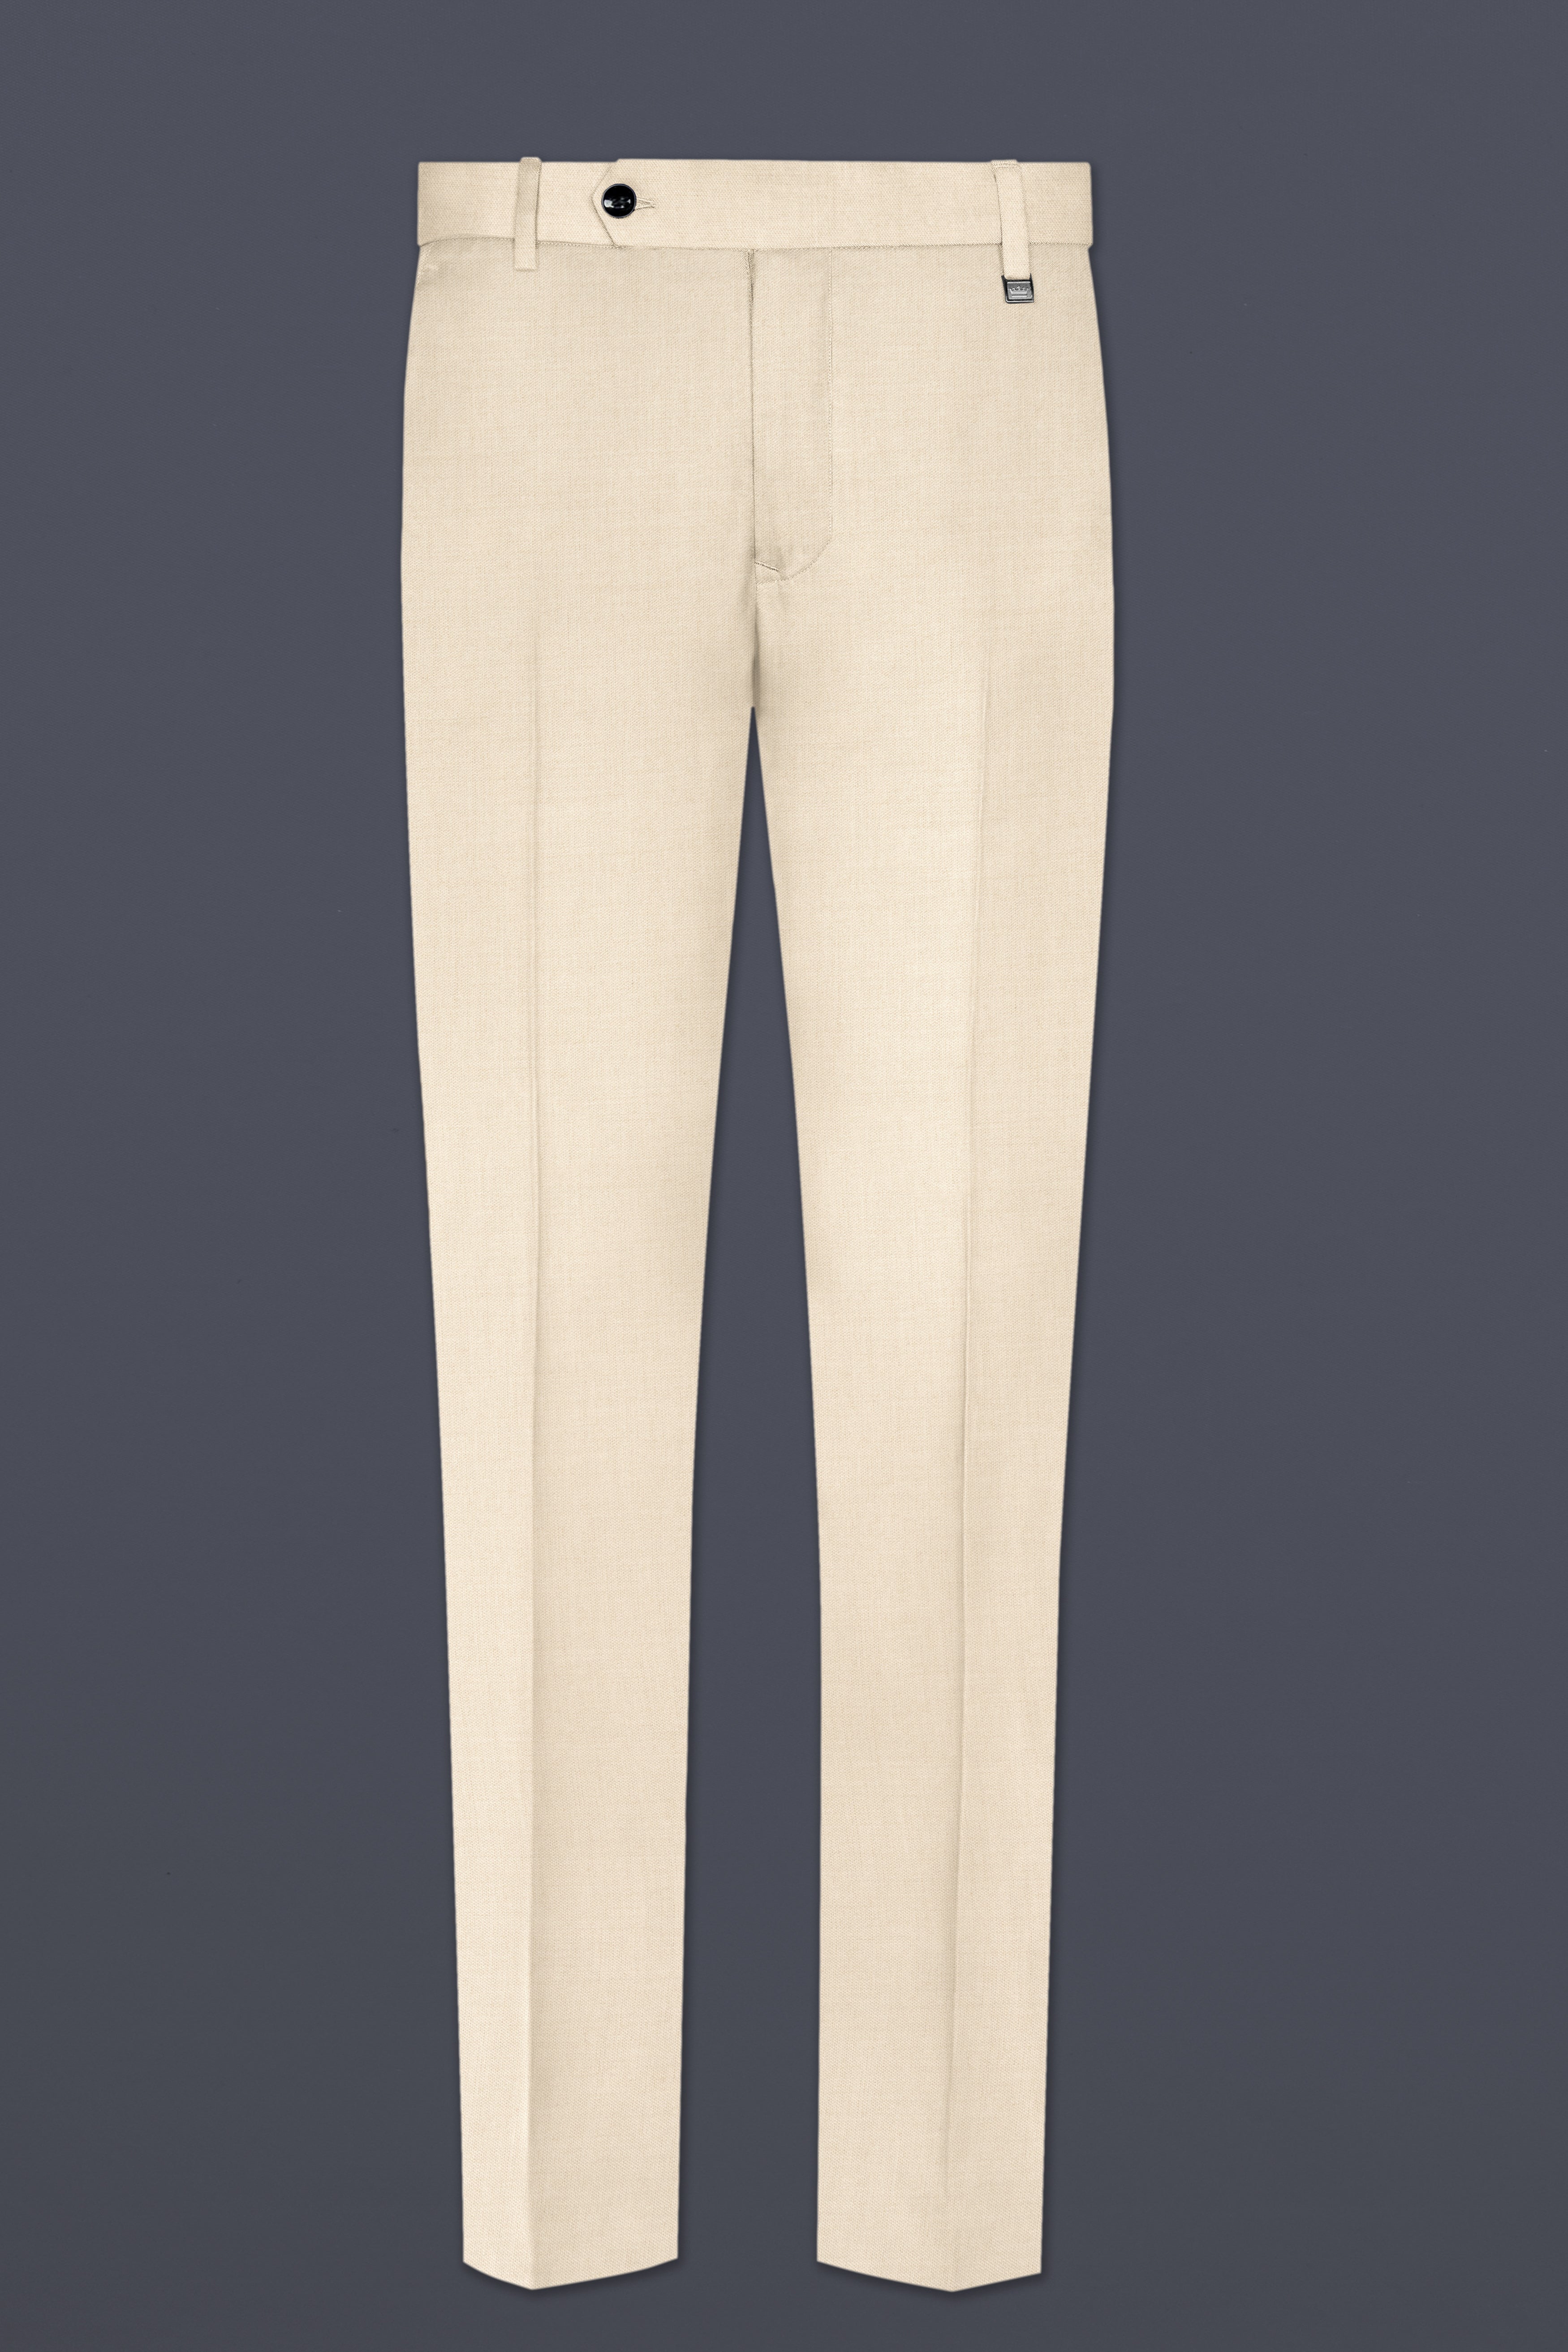 Mercury Cream Bandhgala Suit